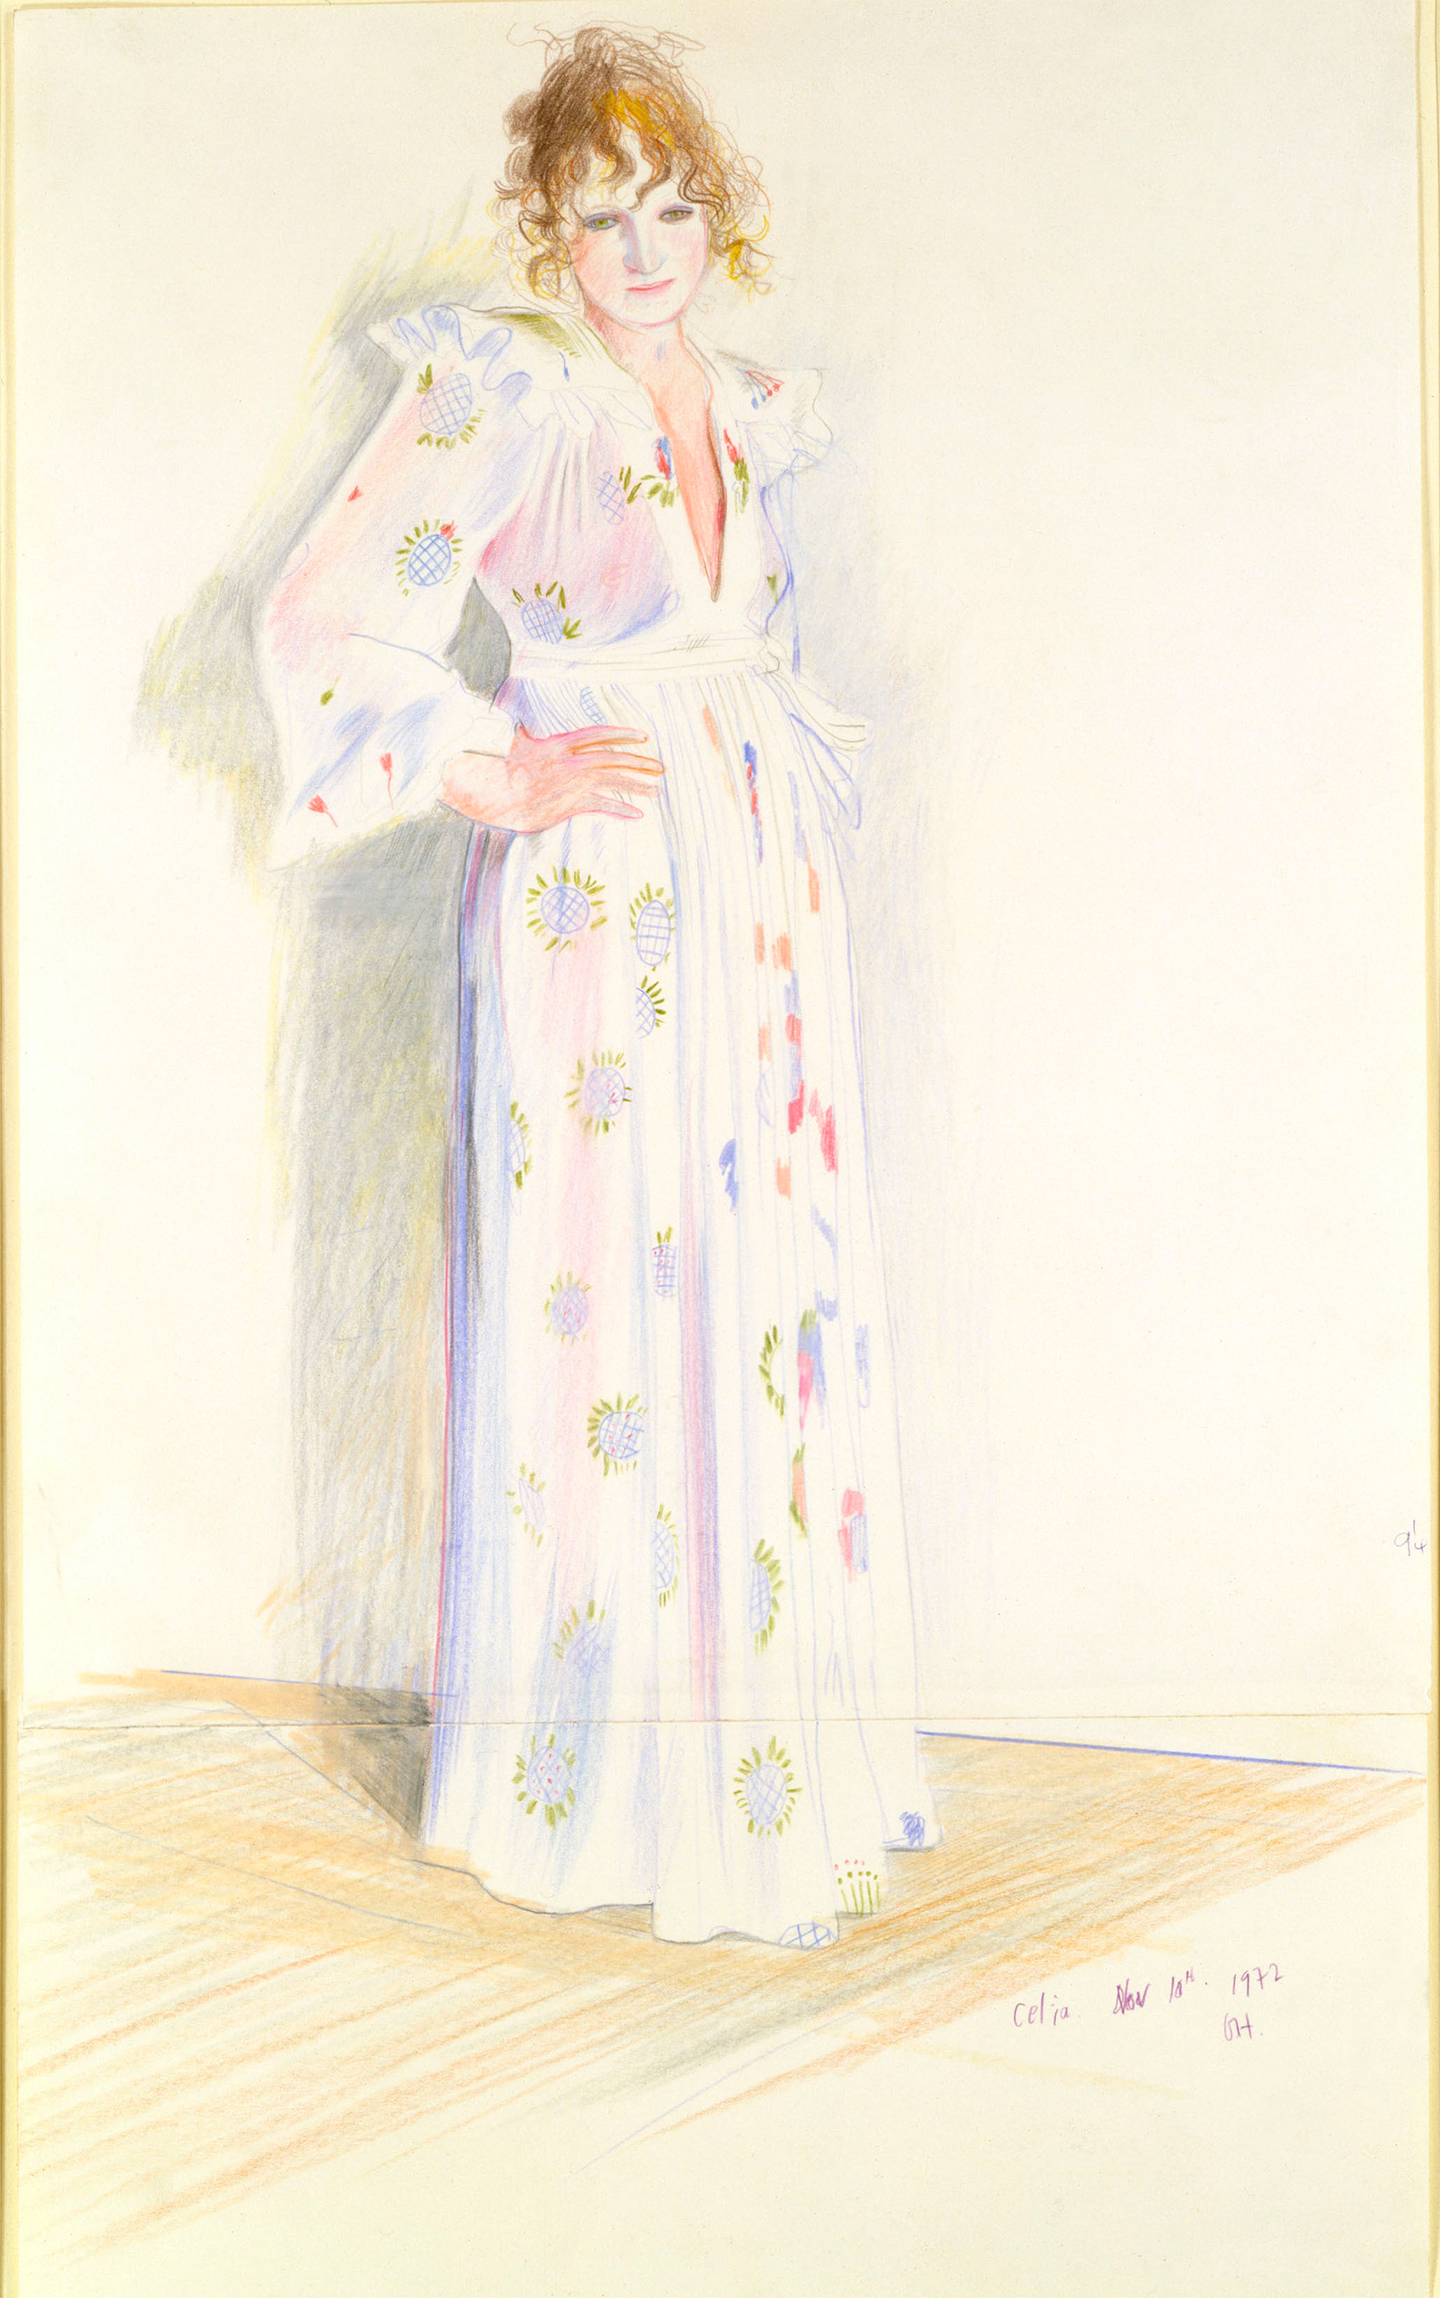 Portrait of Celia Birtwell by David Hockney, crayon on paper 1972